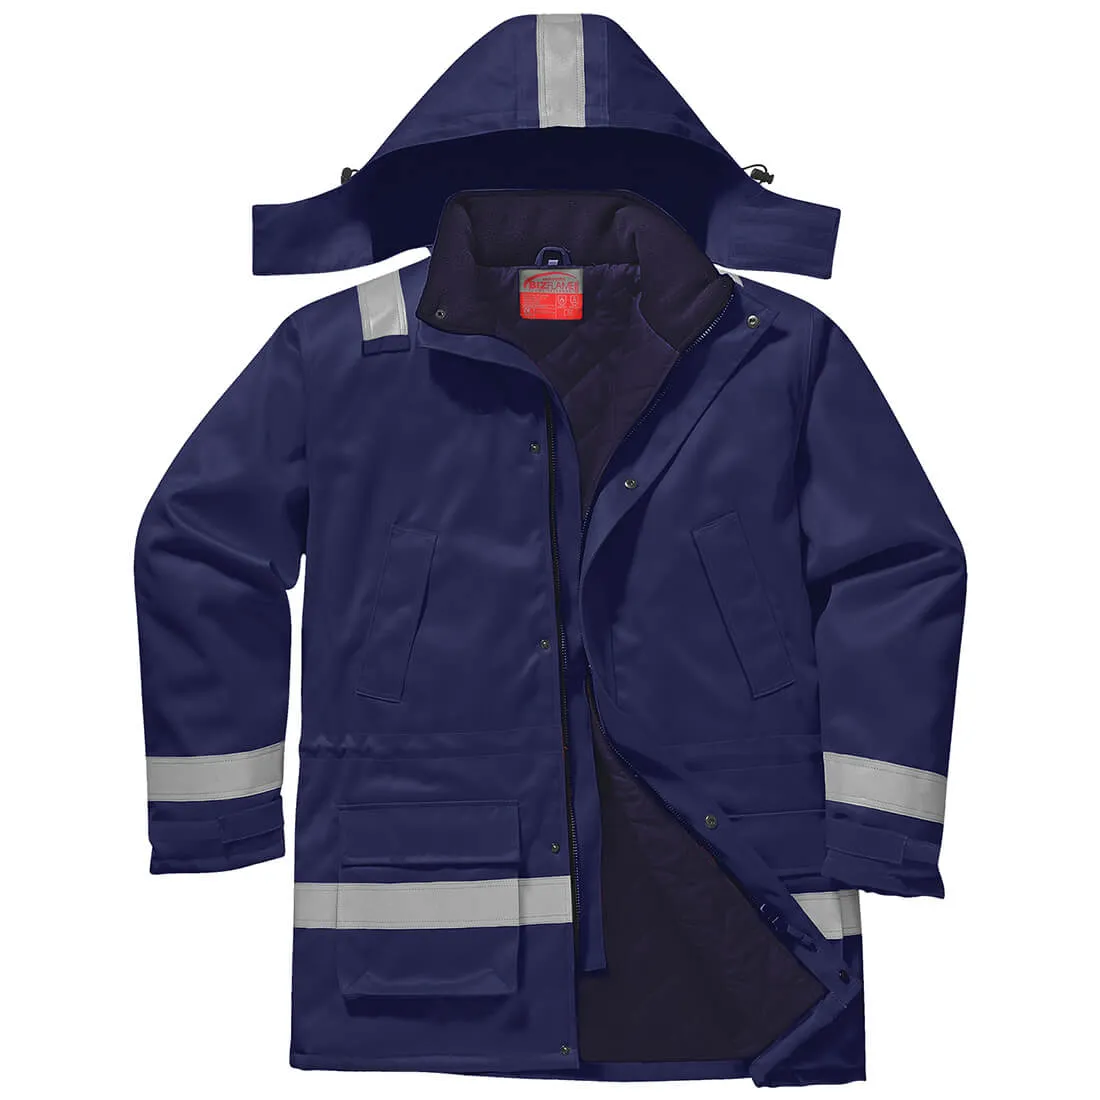 Biz Flame Mens Flame Resistant Antistatic Winter Jacket - Navy, L